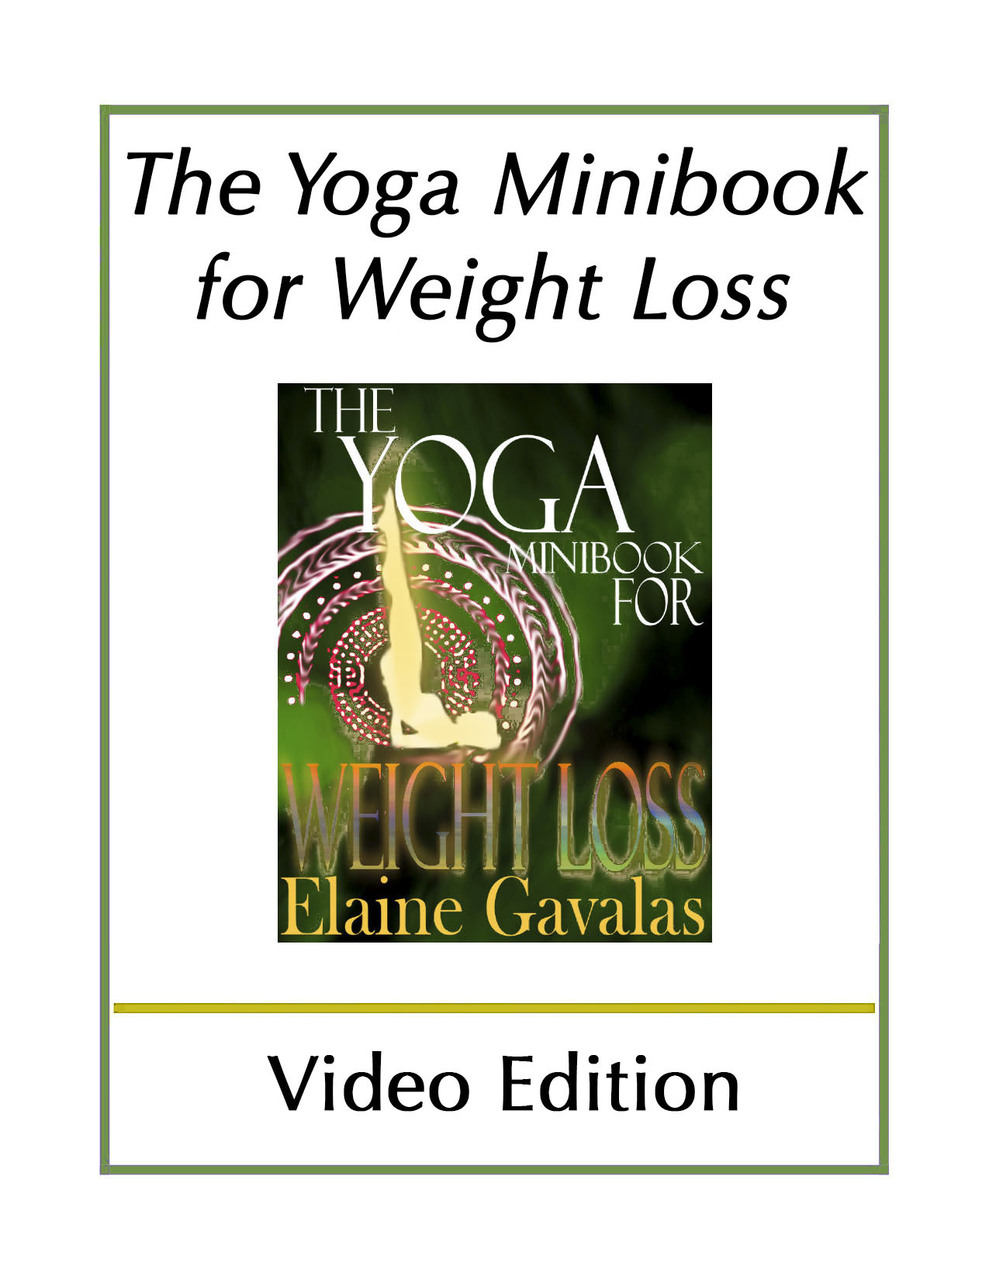 DR. ELAINE GAVALAS - THE YOGA MINIBOOK FOR WEIGHT LOSS & VITALITY SET